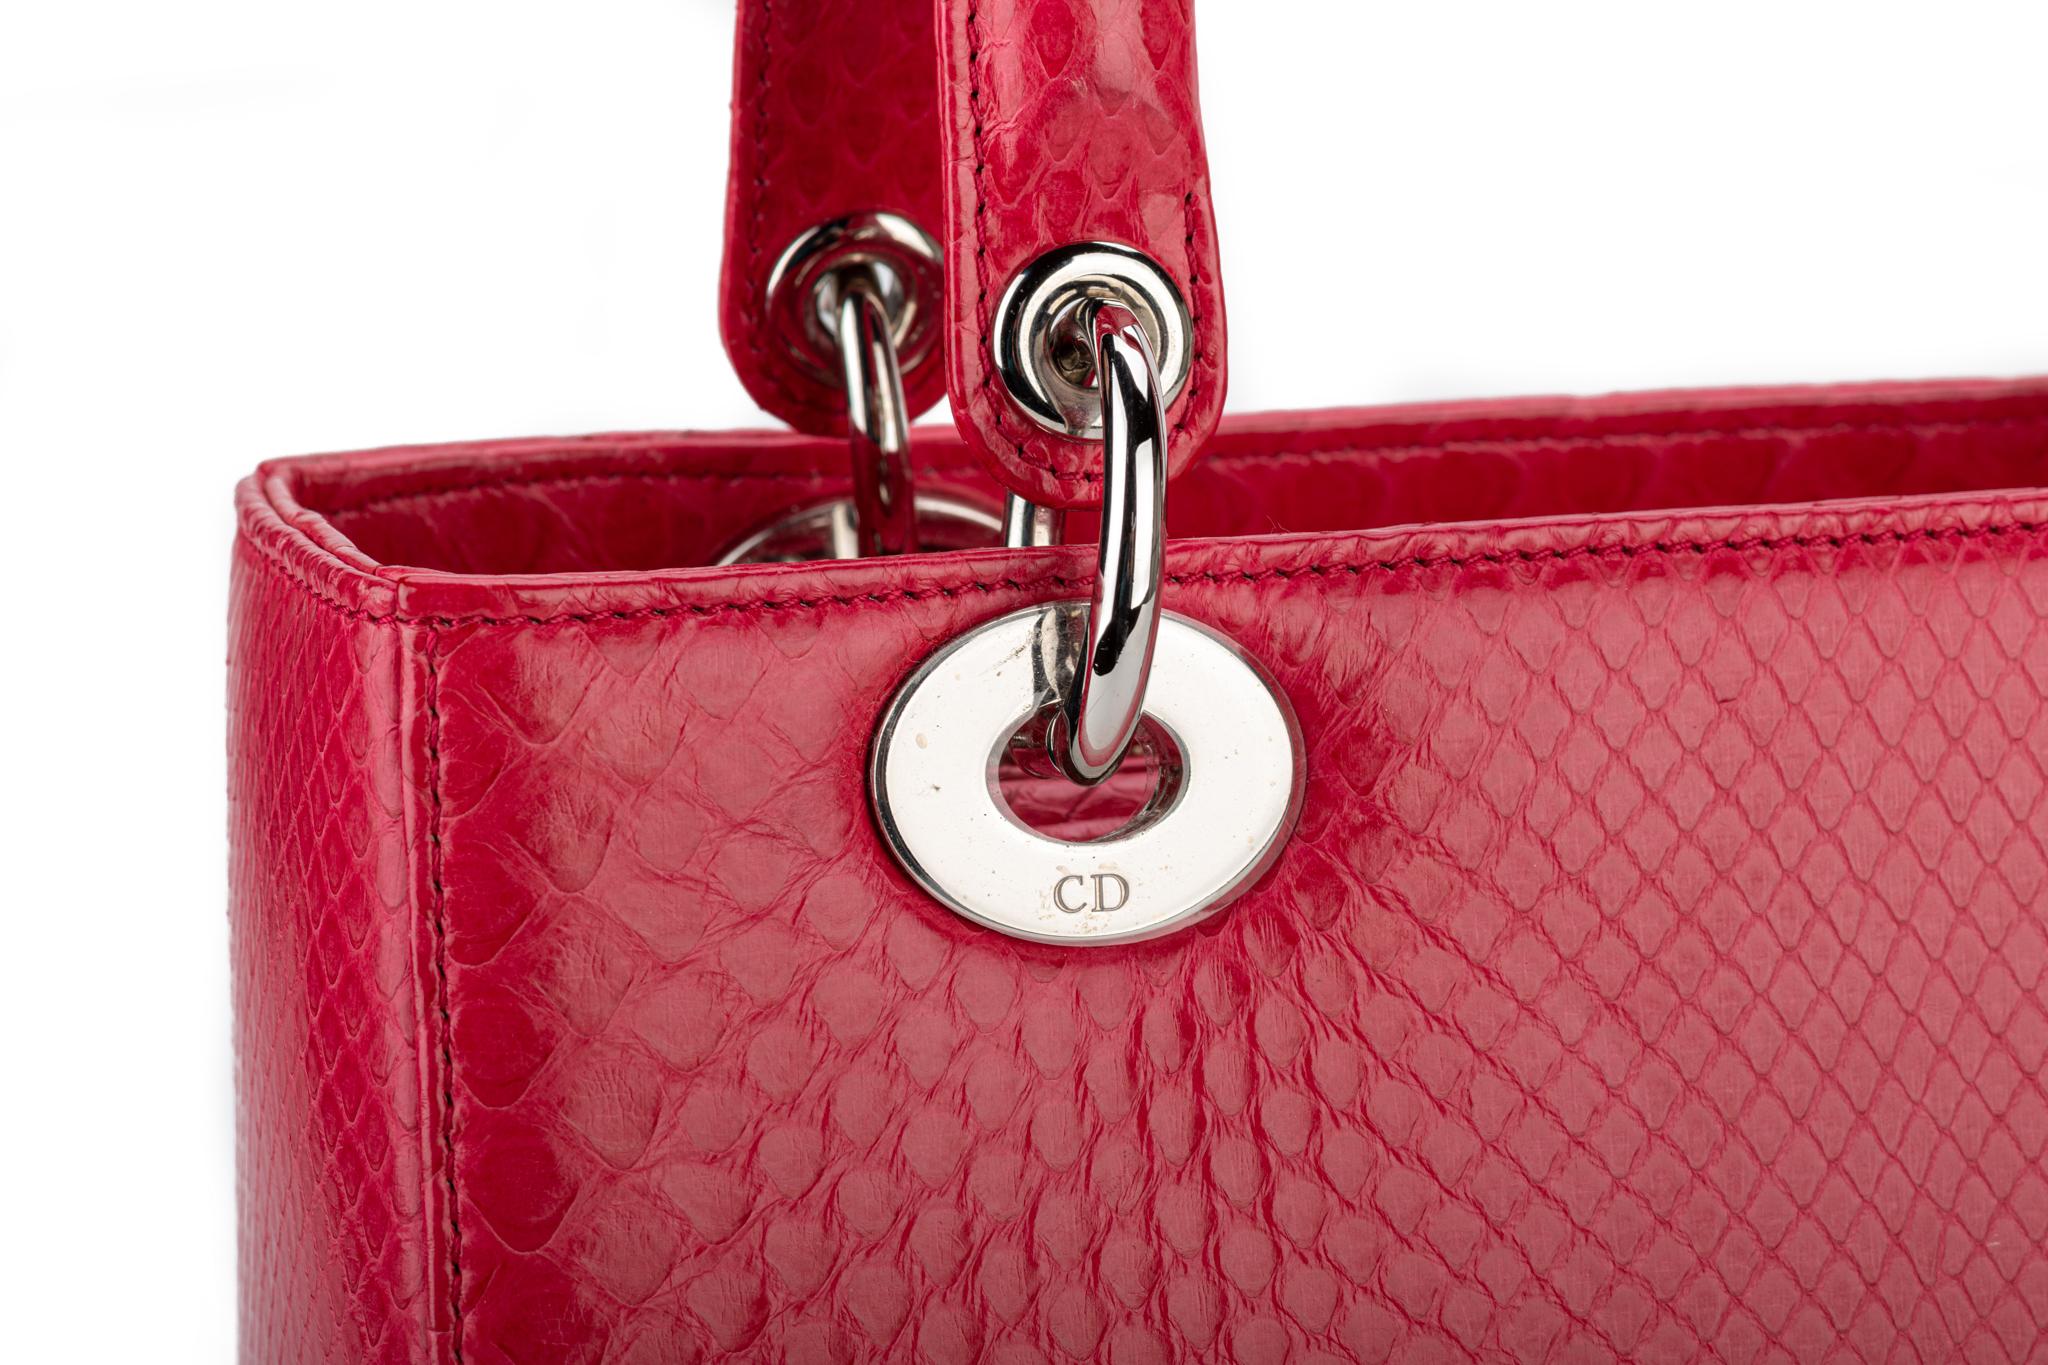  Lady Dior Large Red Python Bag For Sale 4